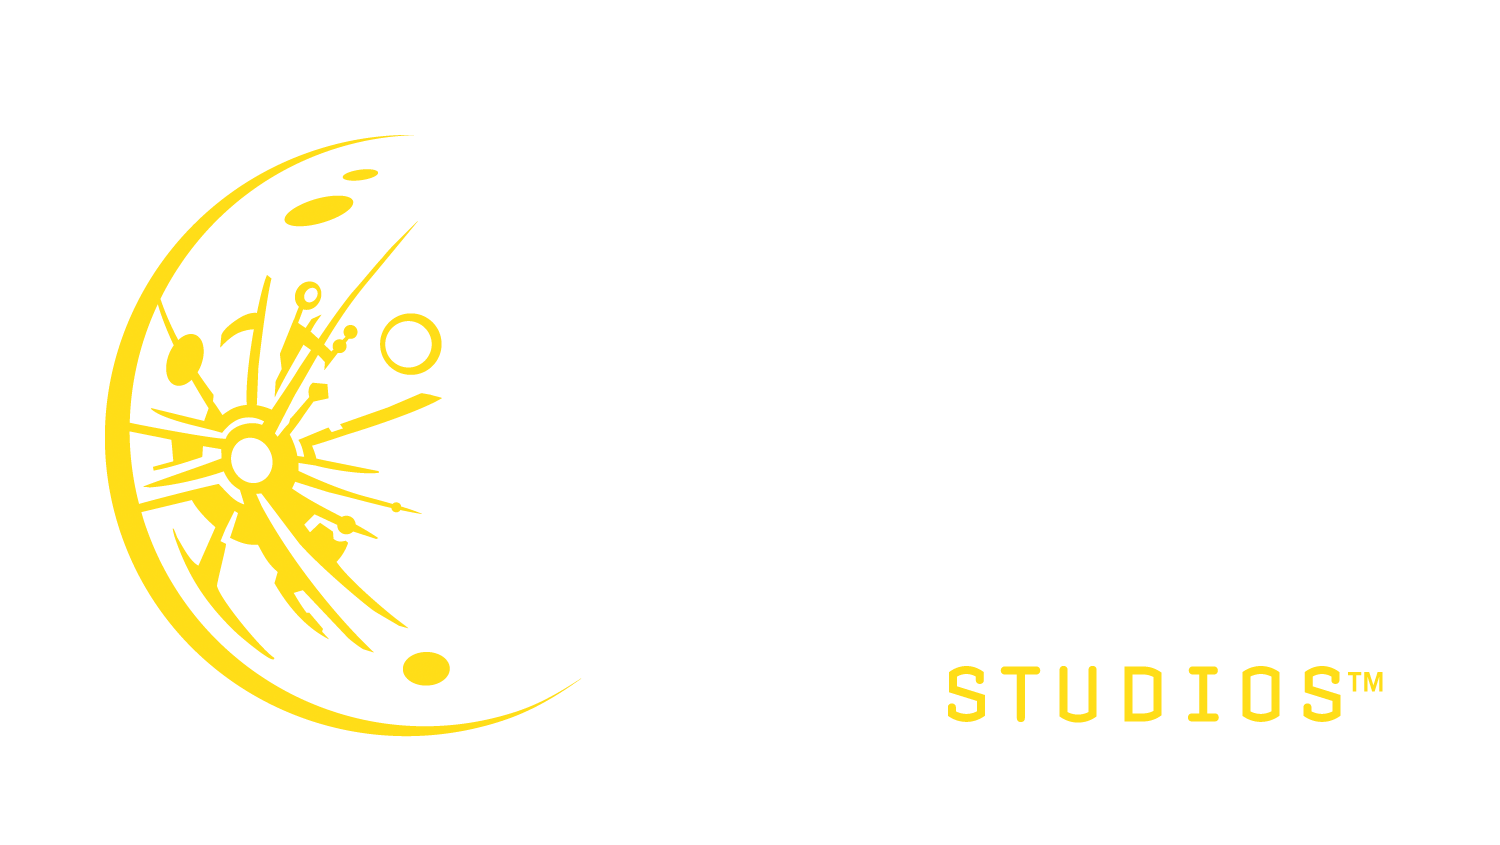 How High the Moon by kyliselle